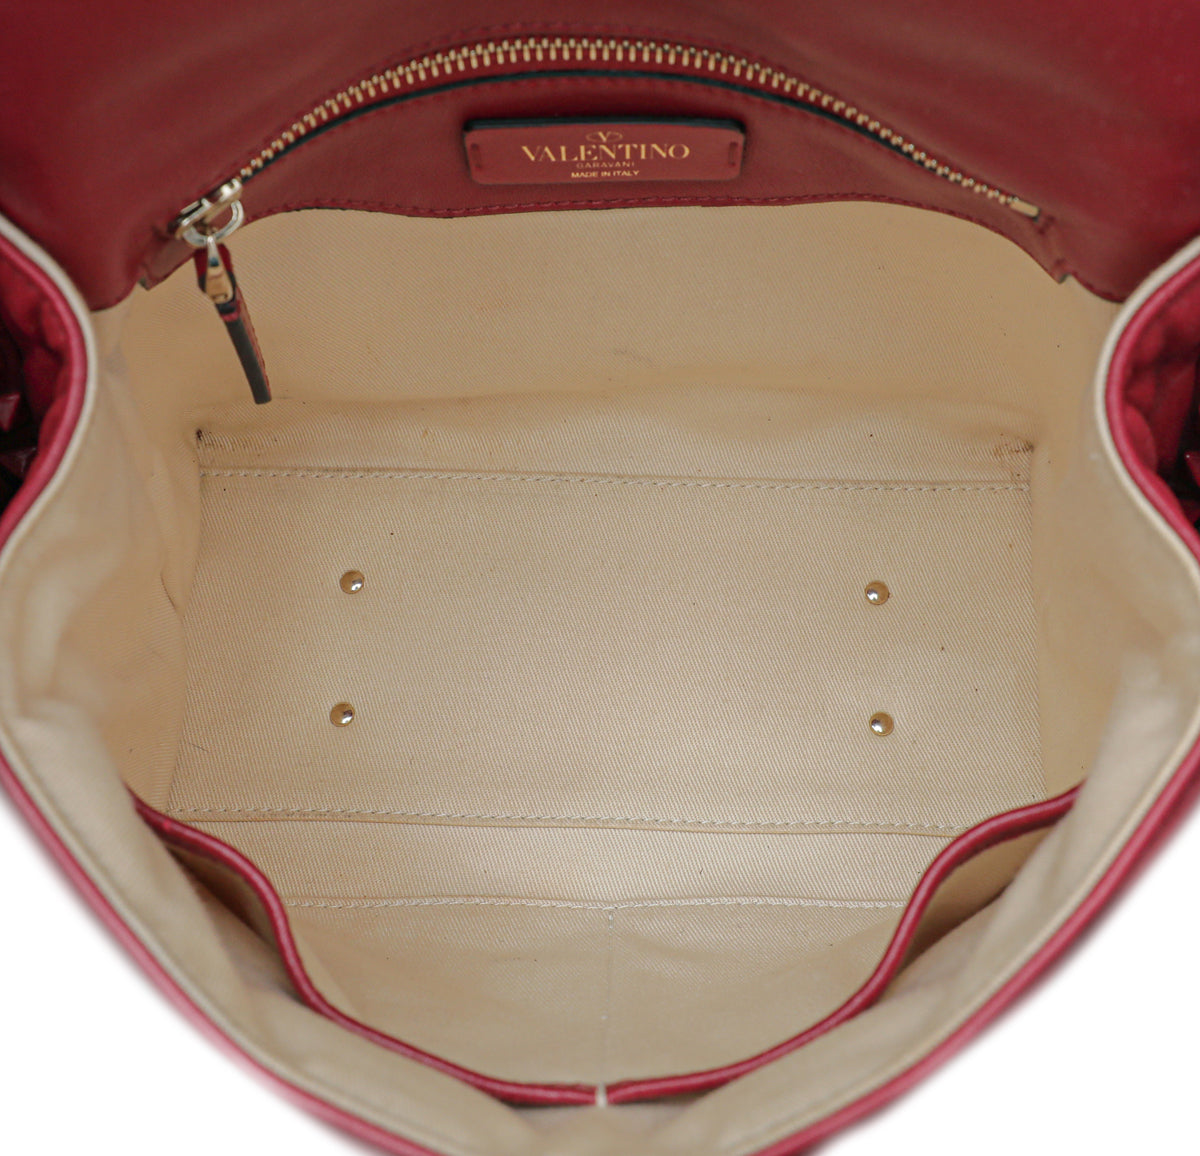 Valentino Garavani Medium Candystud Shoulder Bag in Red